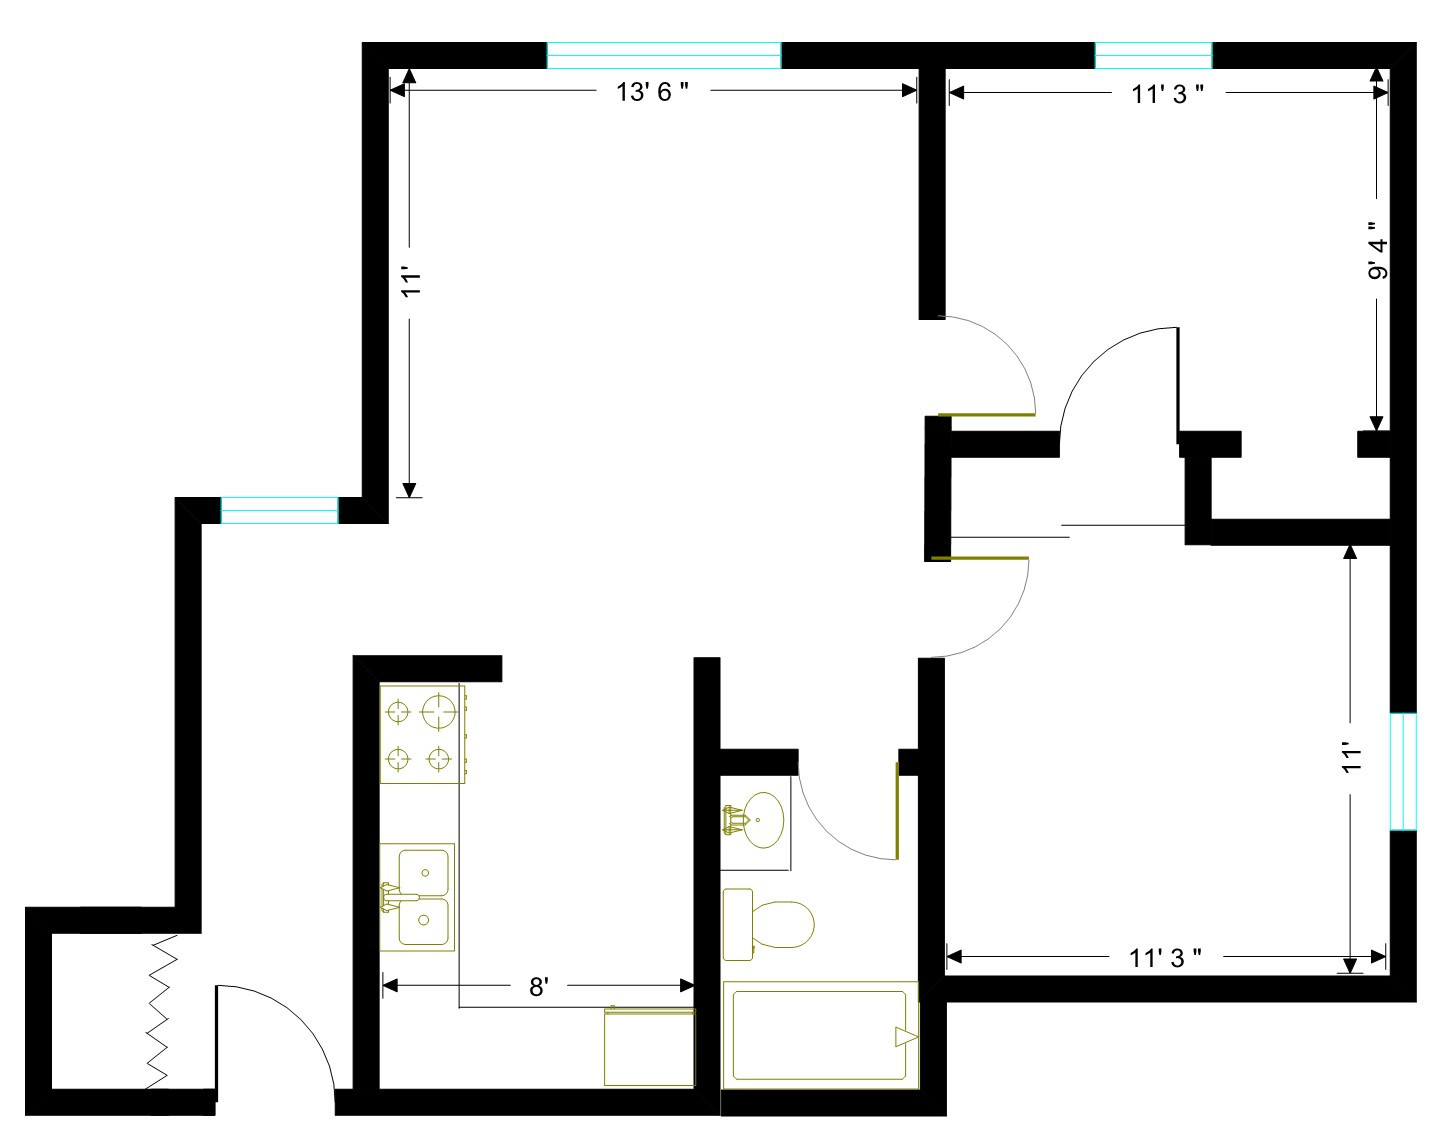 Kerk-4-plex-2-bedroom-layout